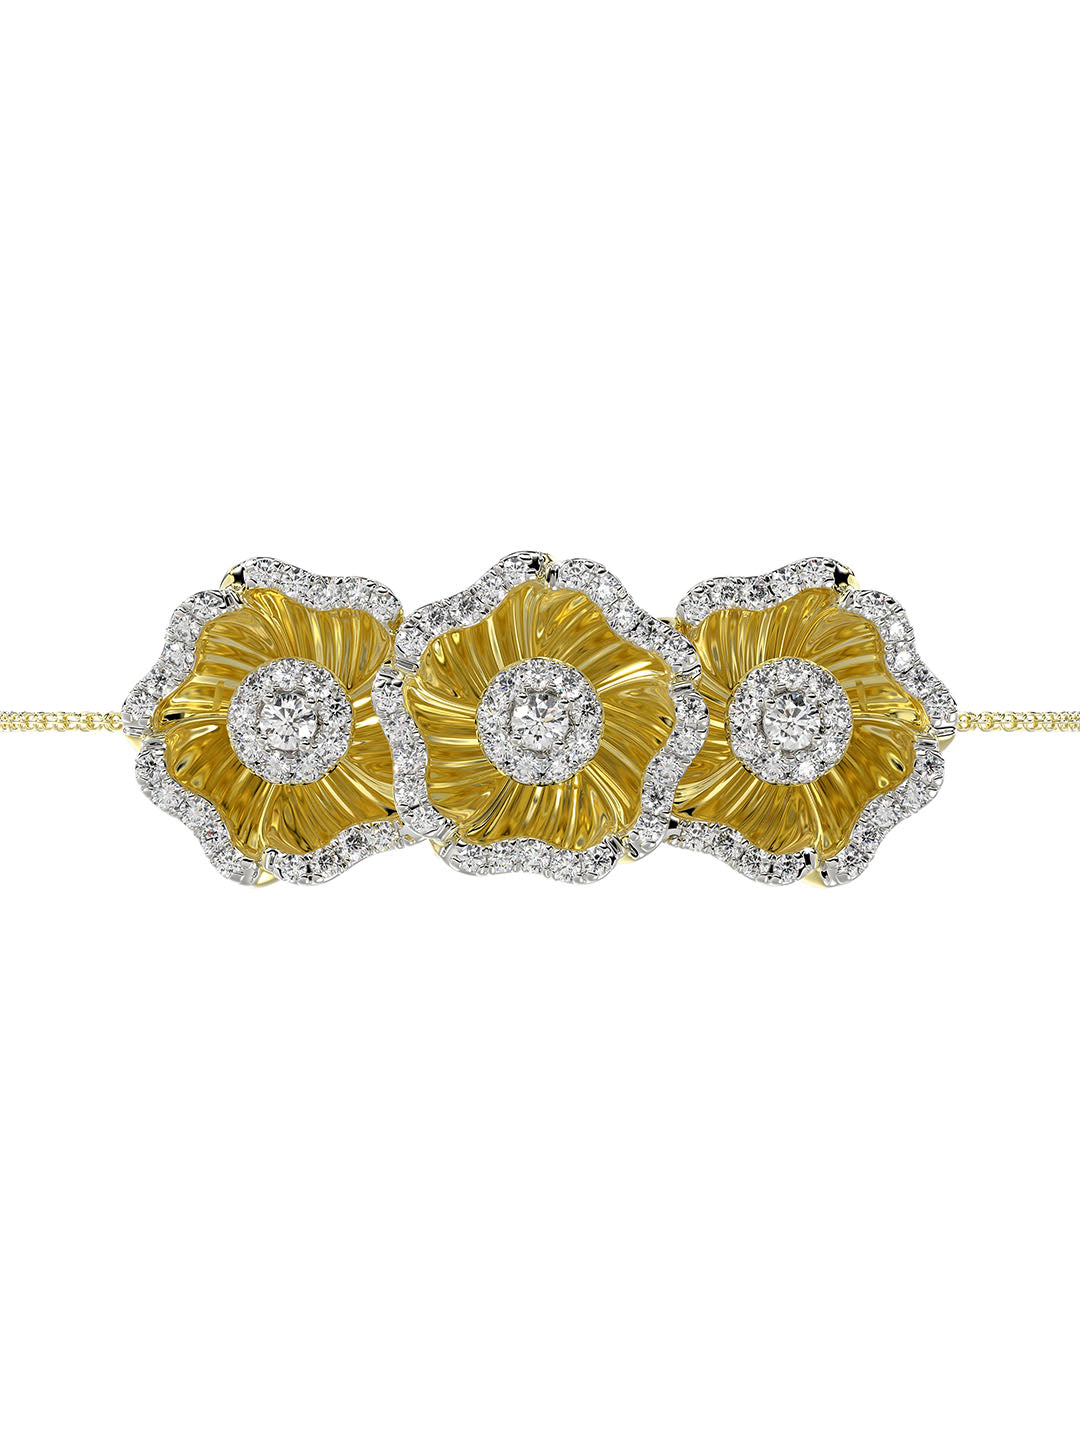 Halo Flower Yellow Gold Bracelet | Marchesa